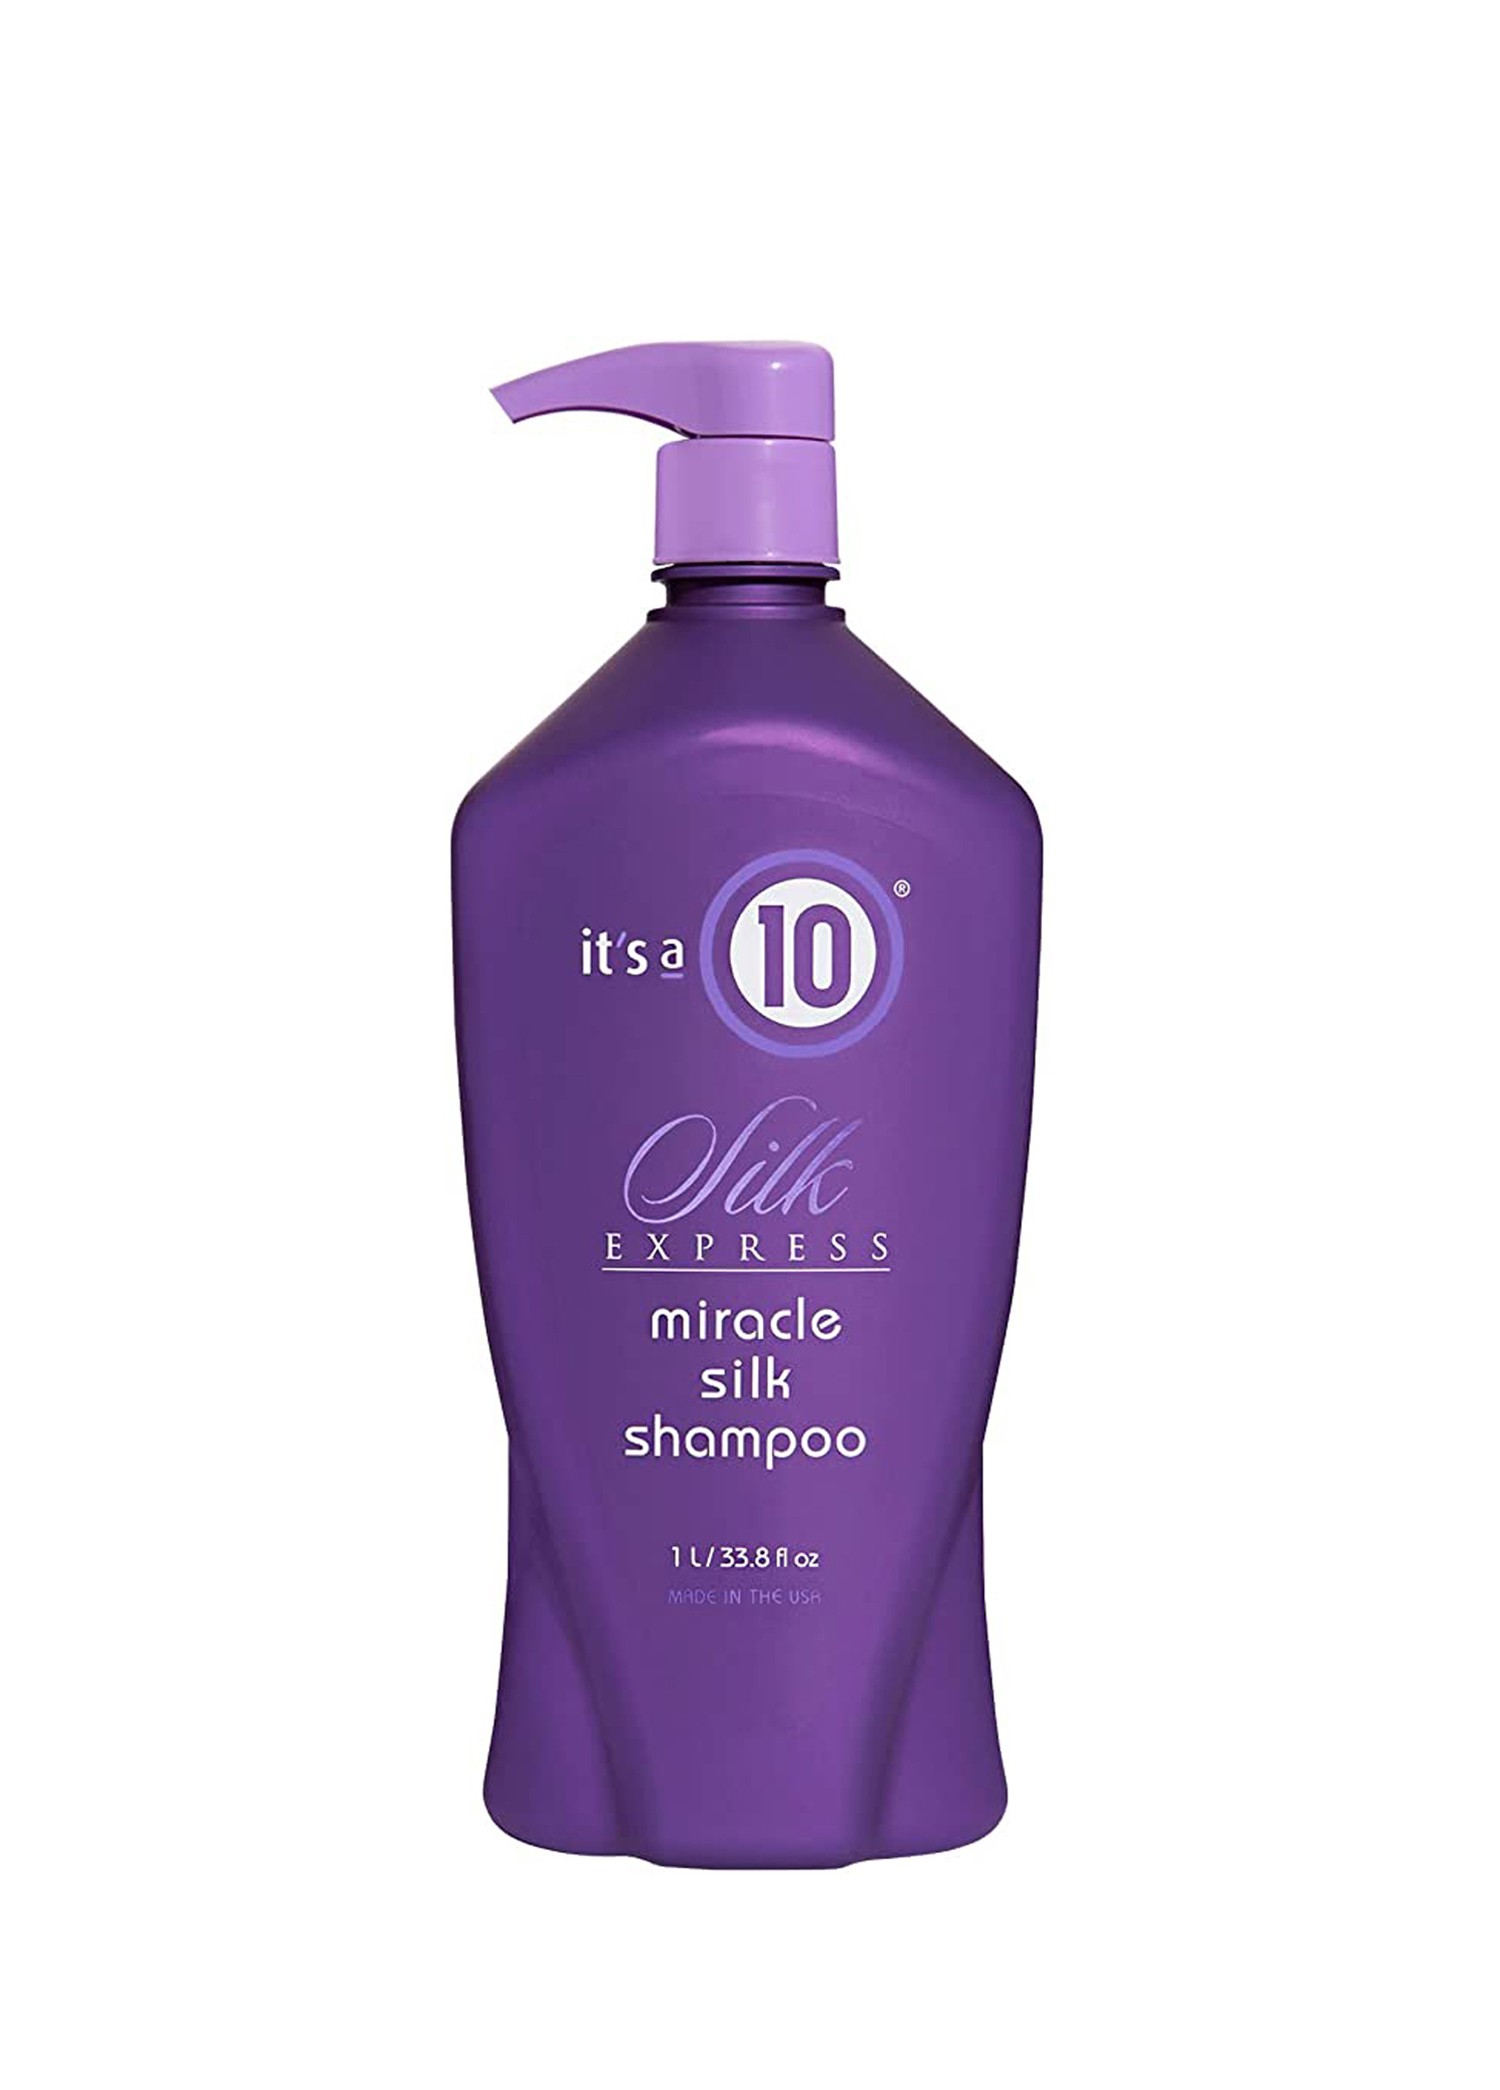 Silk Express Miracle Silk Shampoo 1 lt